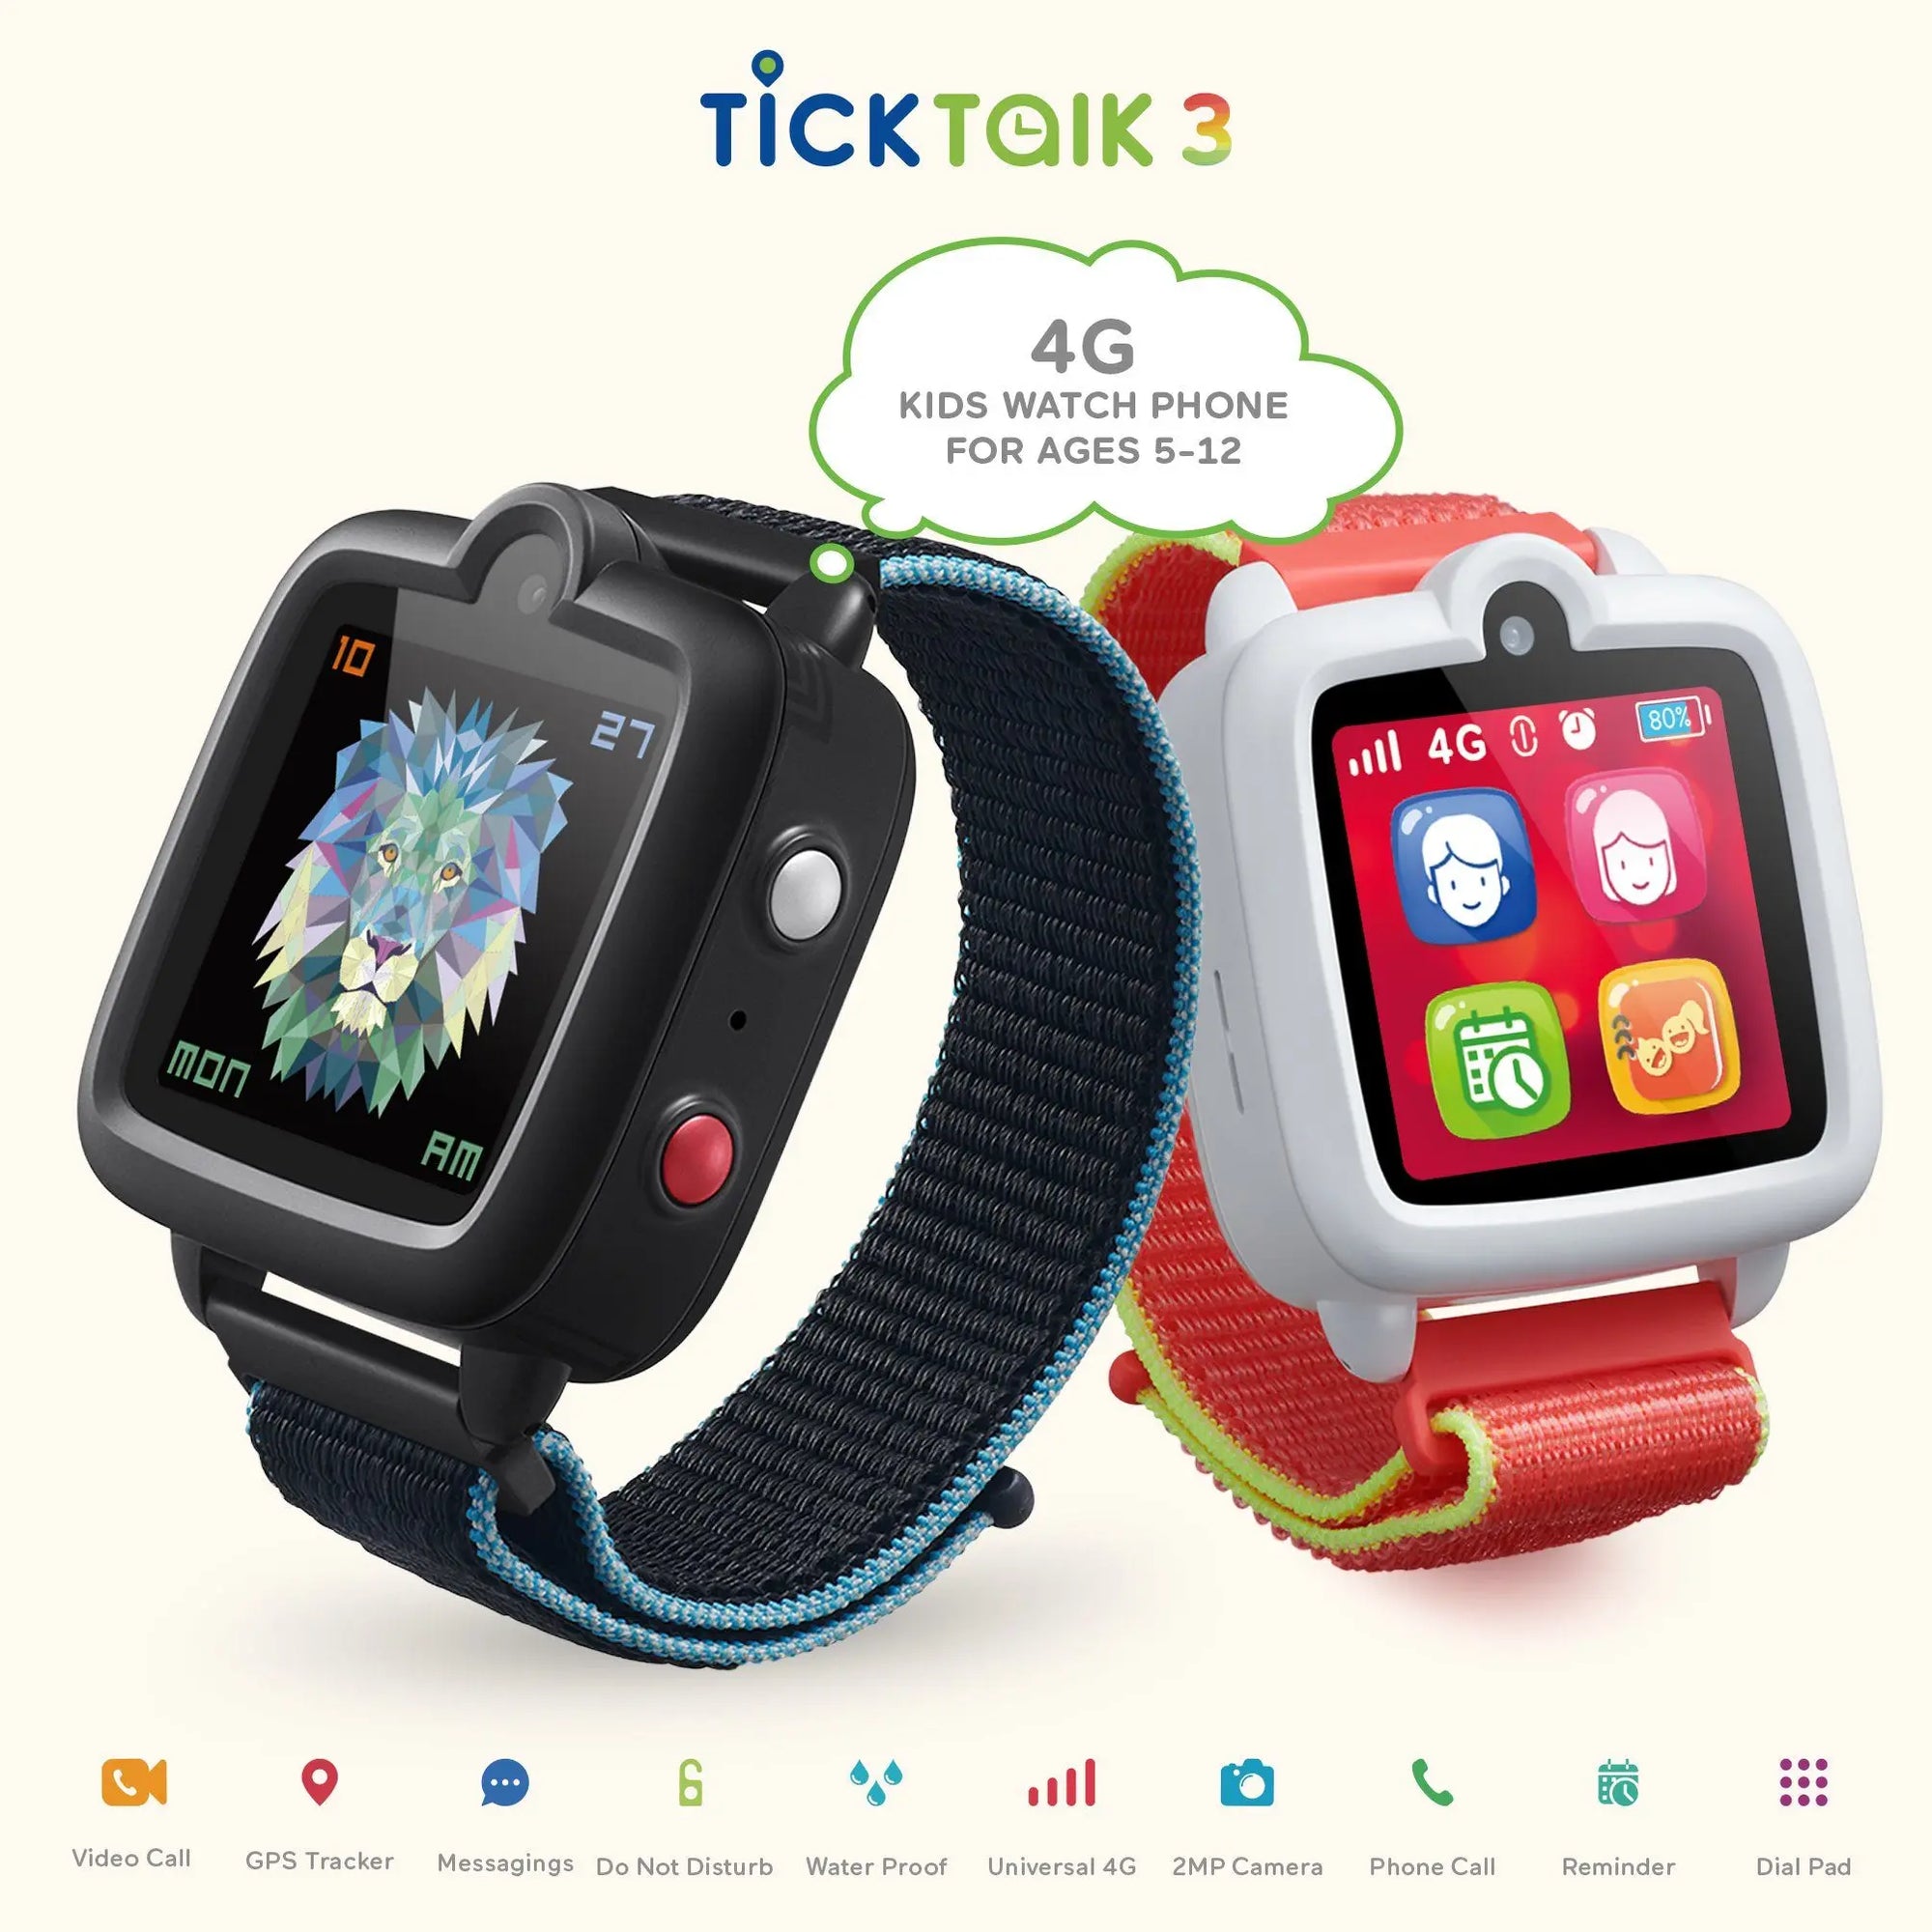 TALK, TRACK & DETECT: TickTalk 3 is the most advanced kids tracker phone